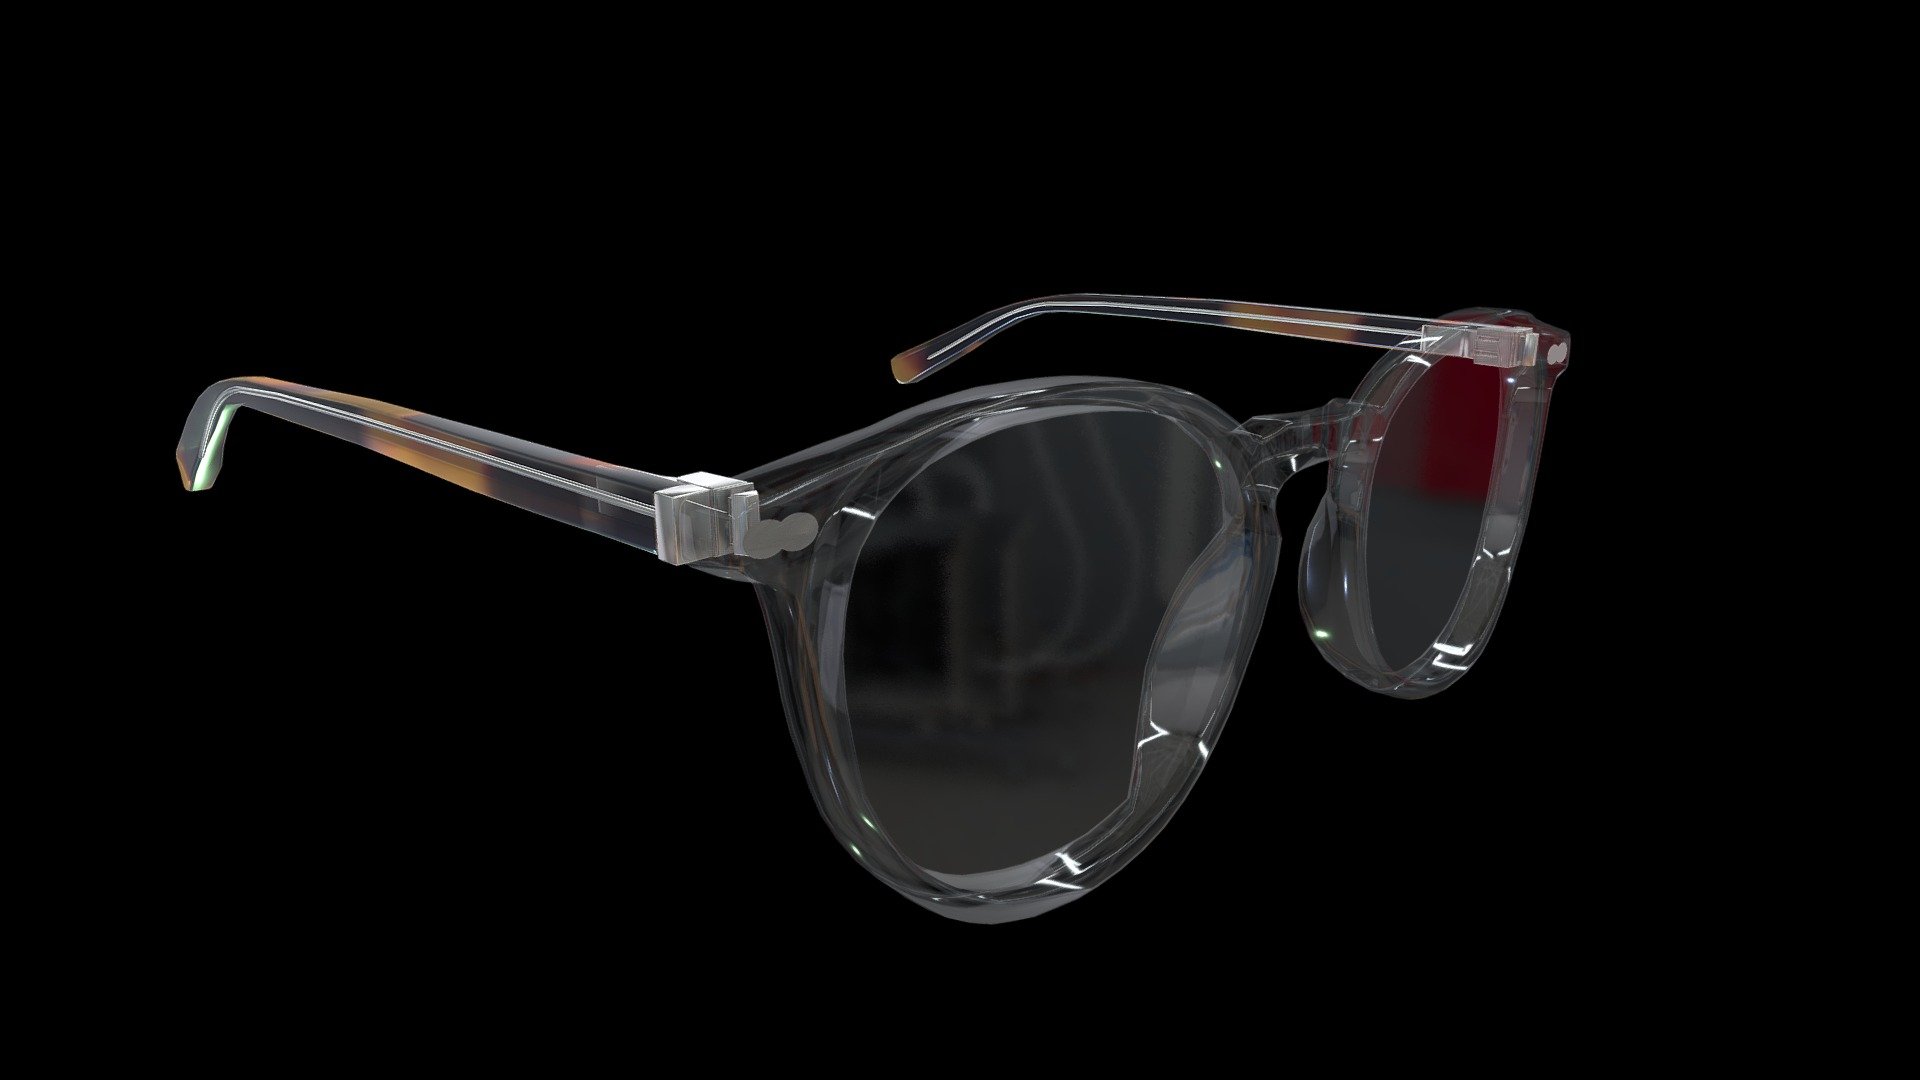 Based on my glasses! - Glasses - Download Free 3D model by drydoctoregg 3d model